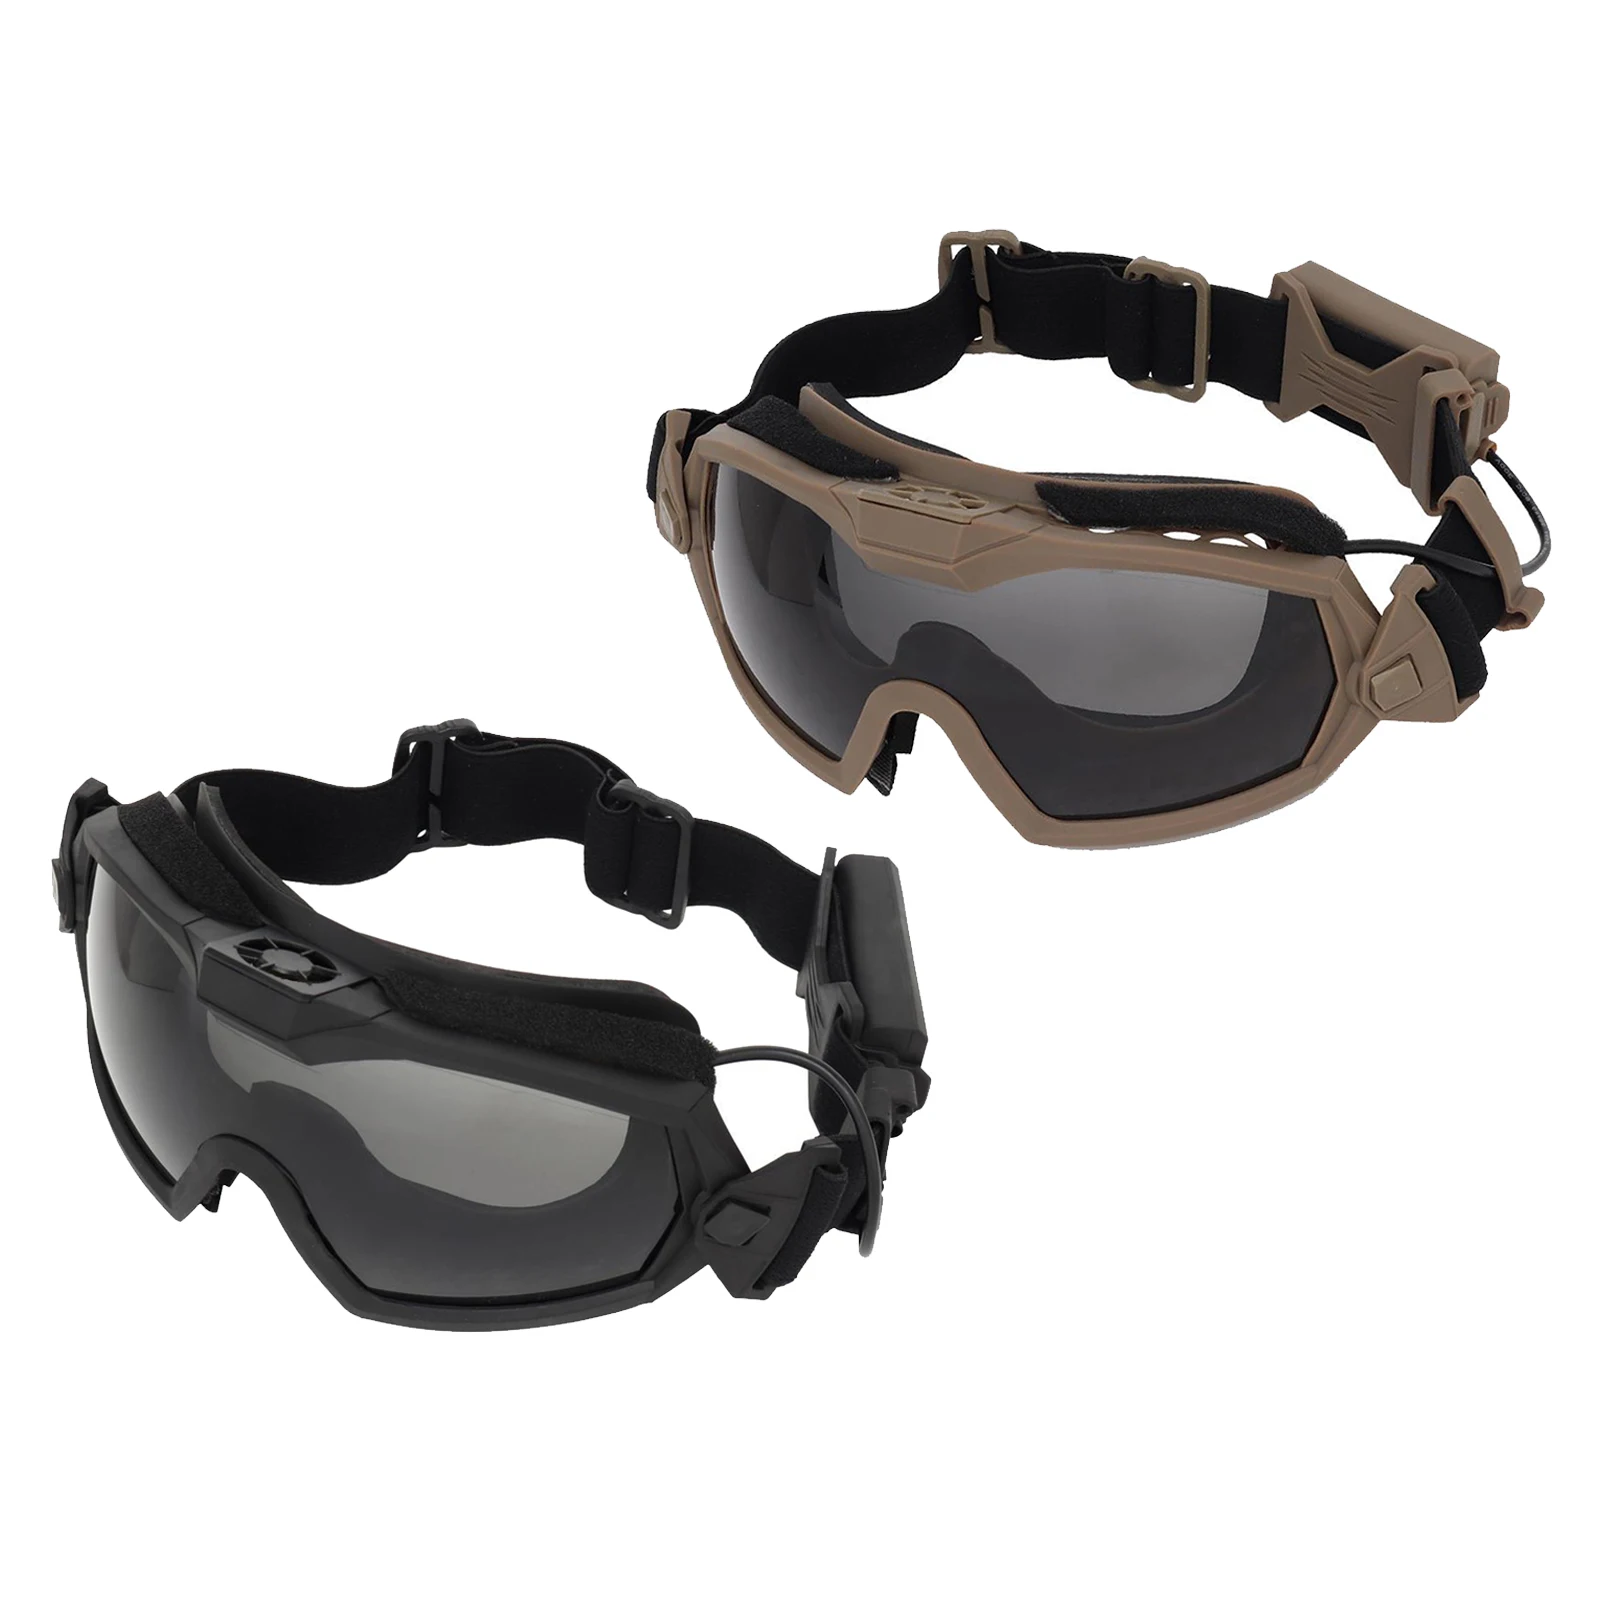 Tactical Goggles Shooting Hunting Eye Protection Shockproof Anti-Fog Eyewear